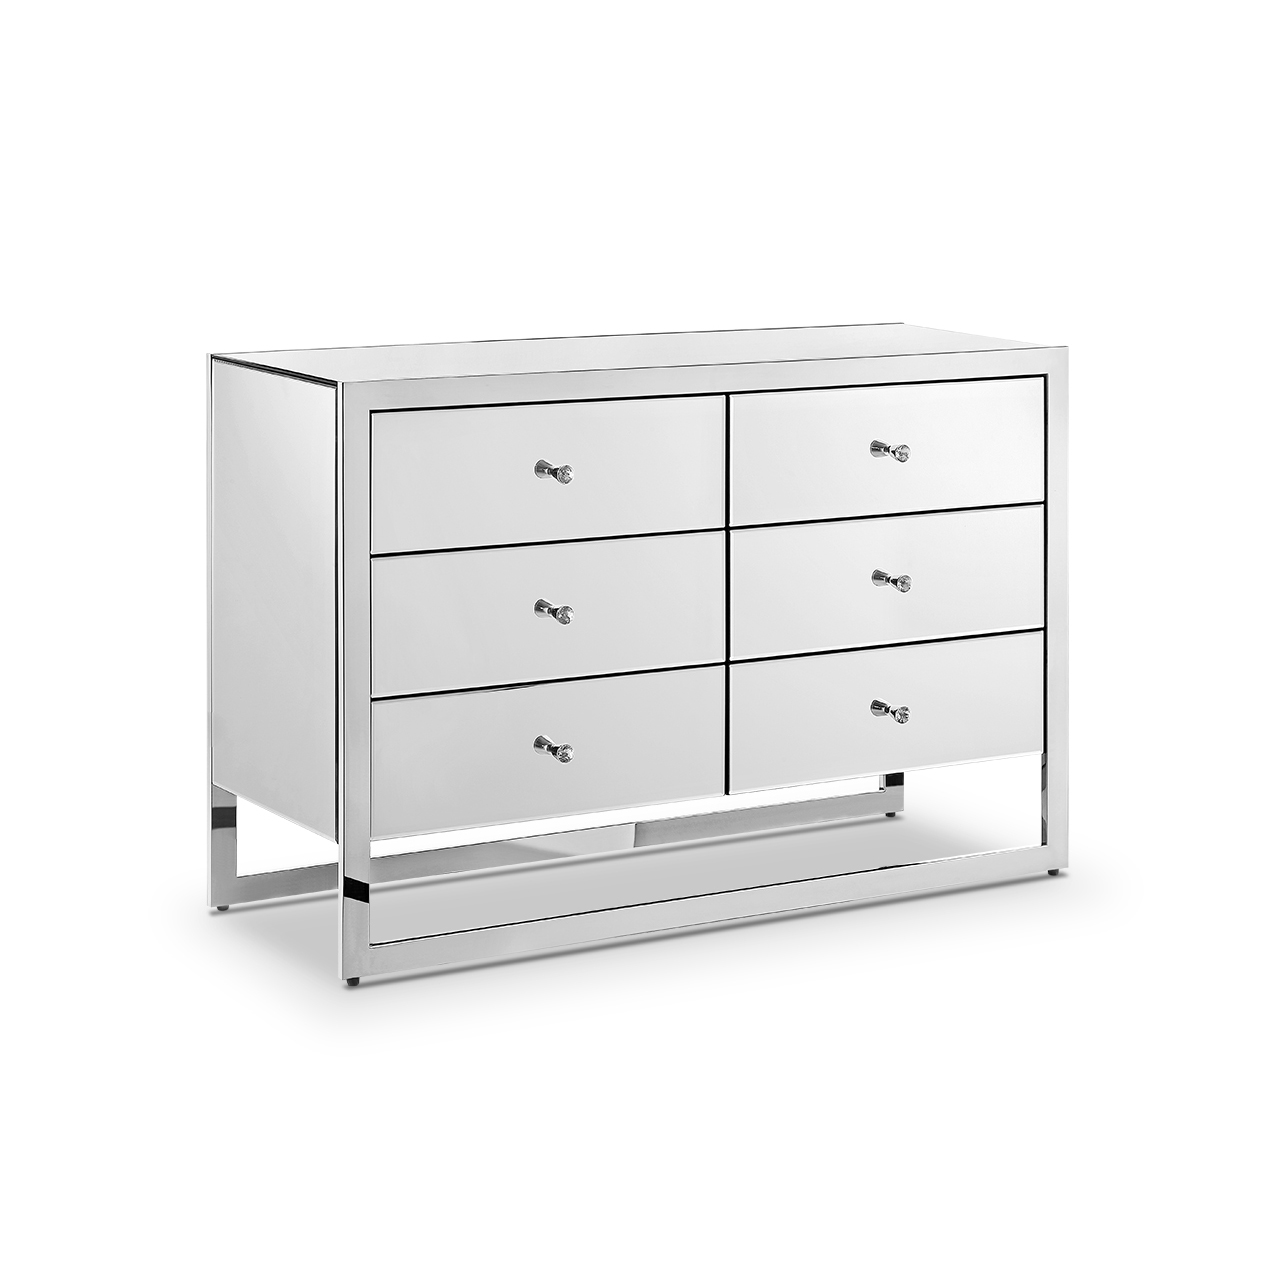 China Manufacturer for Living Room Furniture Manufacturer - Dressers & Chests – 19C1304 – KUANFULL